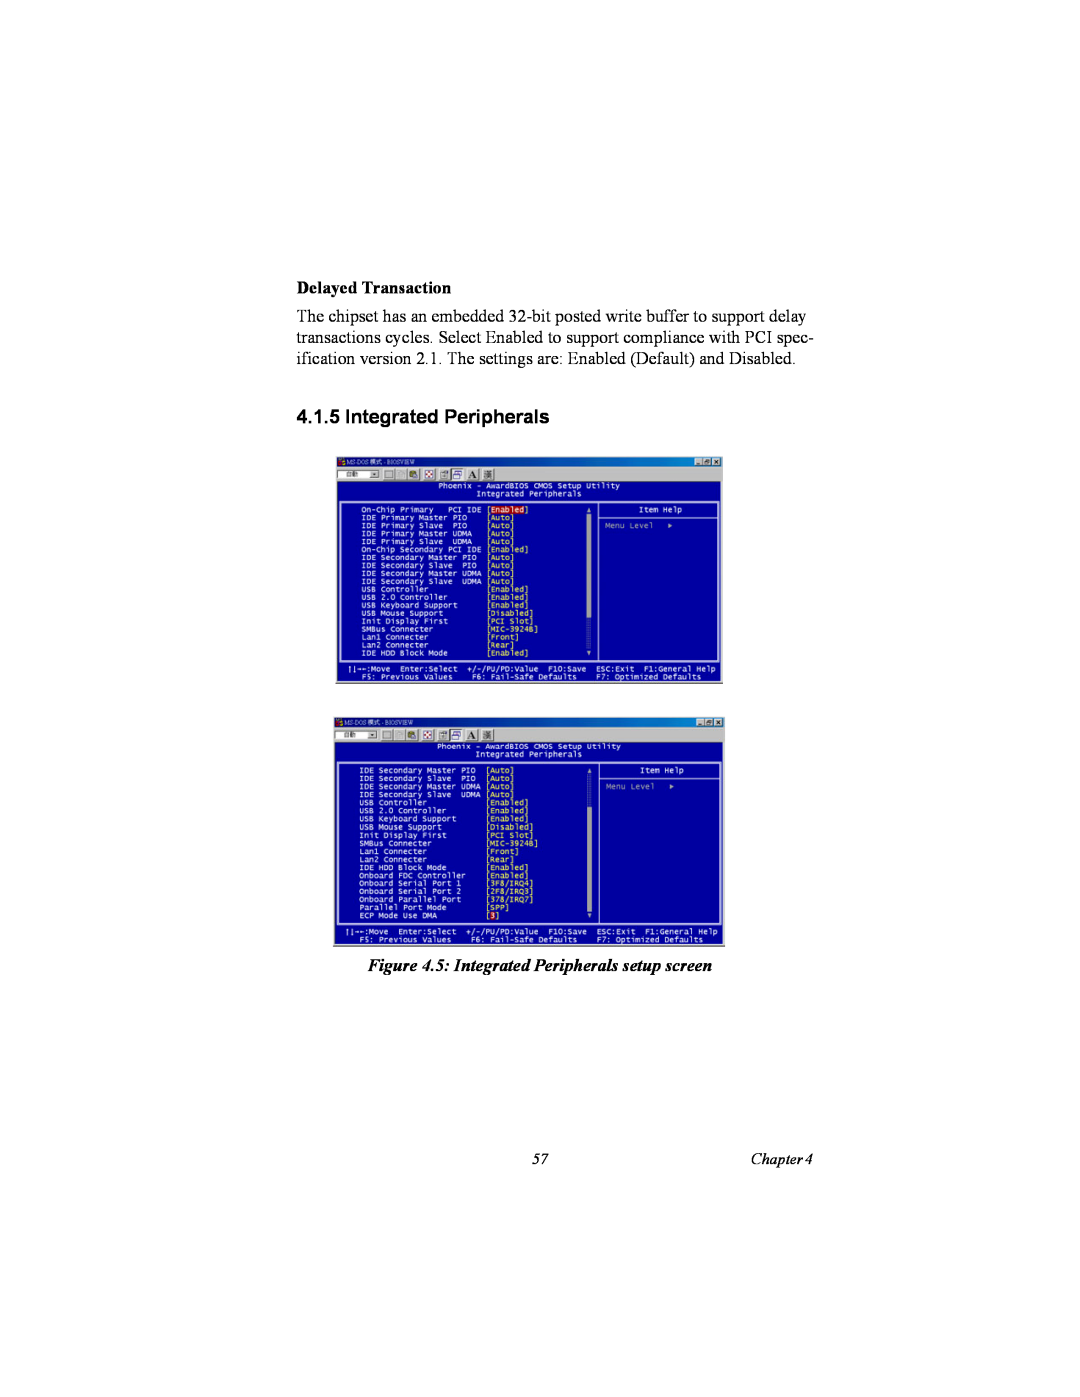 Intel MIC-3358 user manual Delayed Transaction, 5 Integrated Peripherals setup screen 